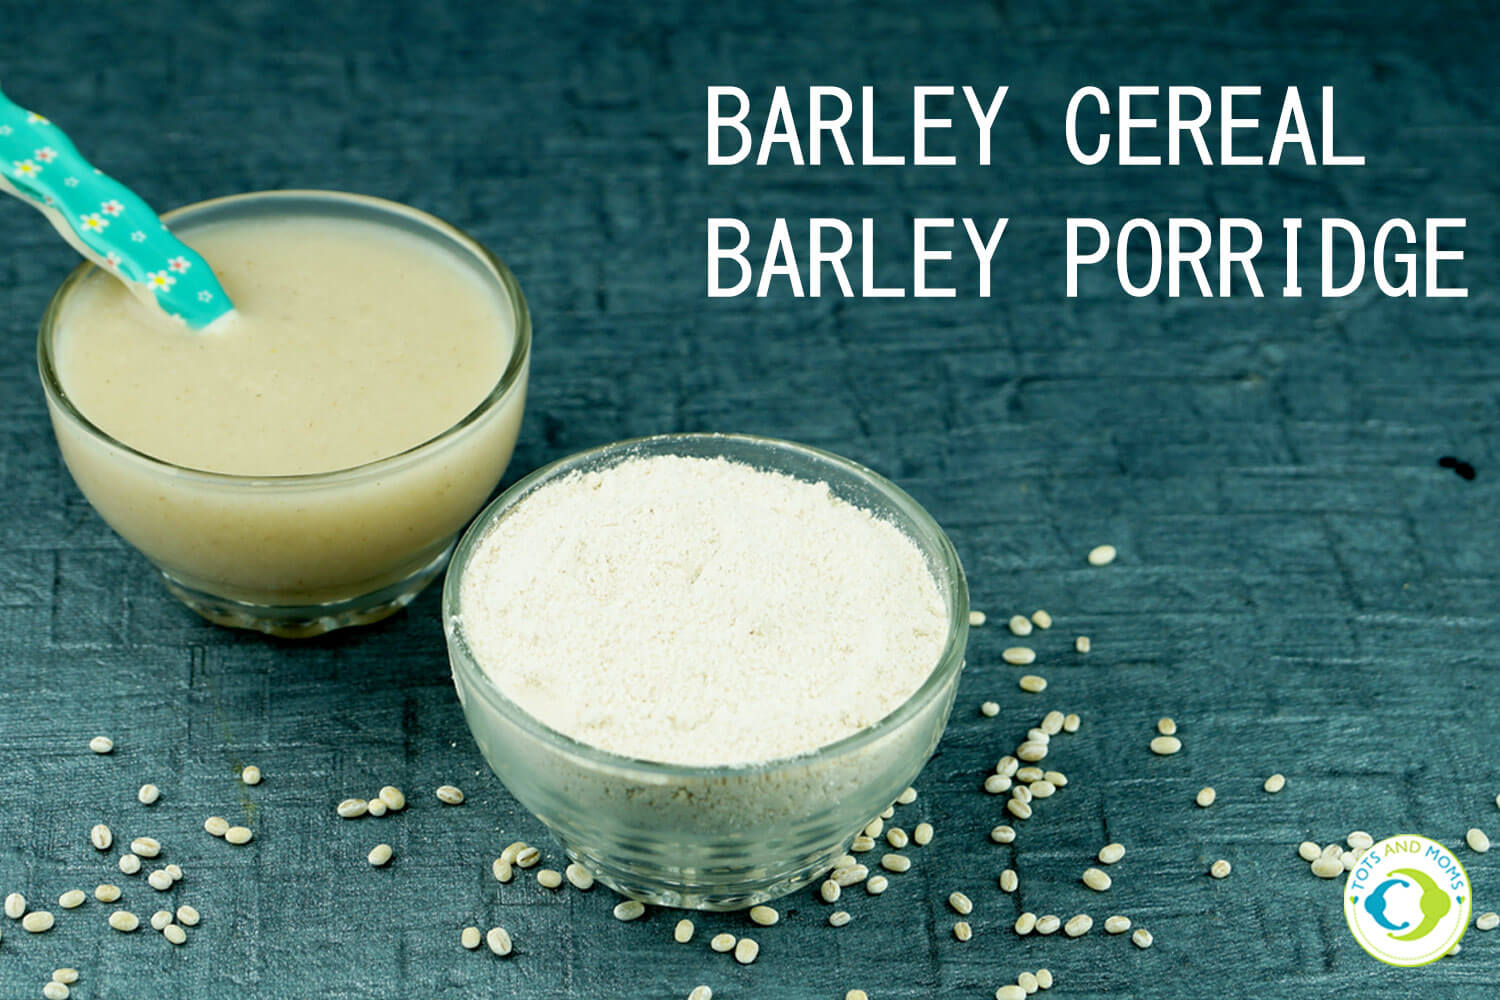 Barley Cereal & Barley Porridge weaning food